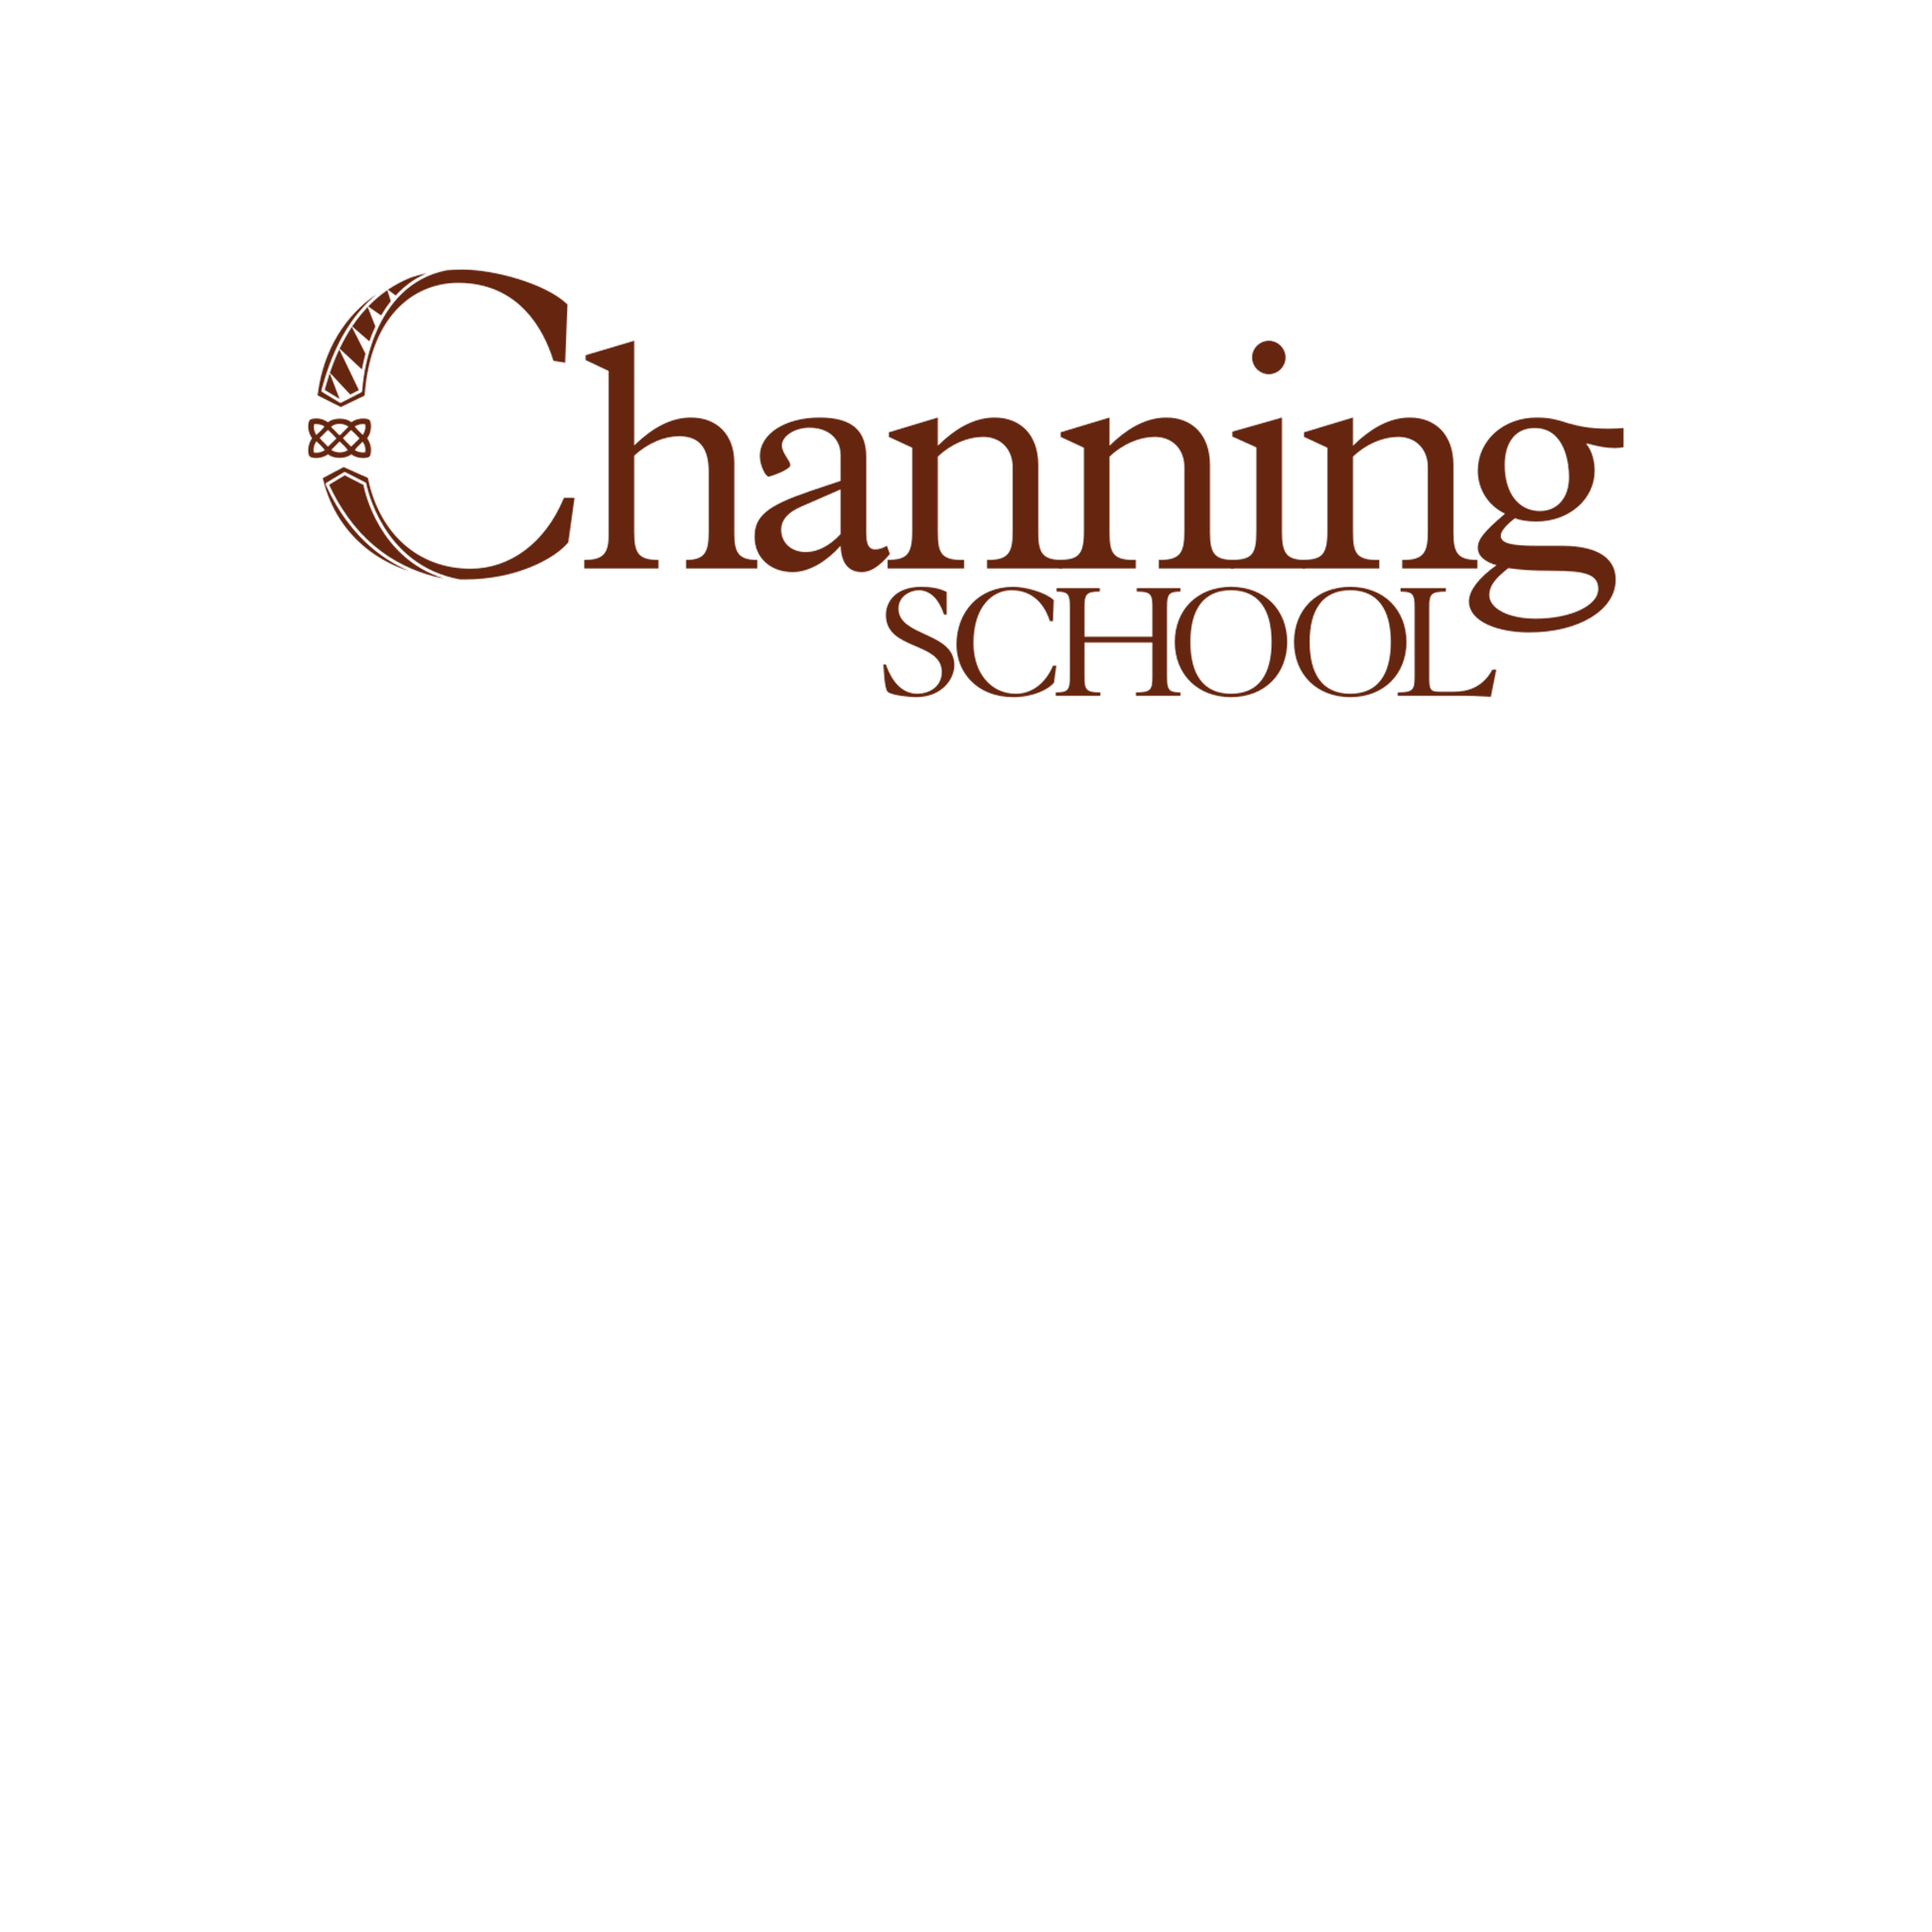 Channing School: 11+ English (2008) 